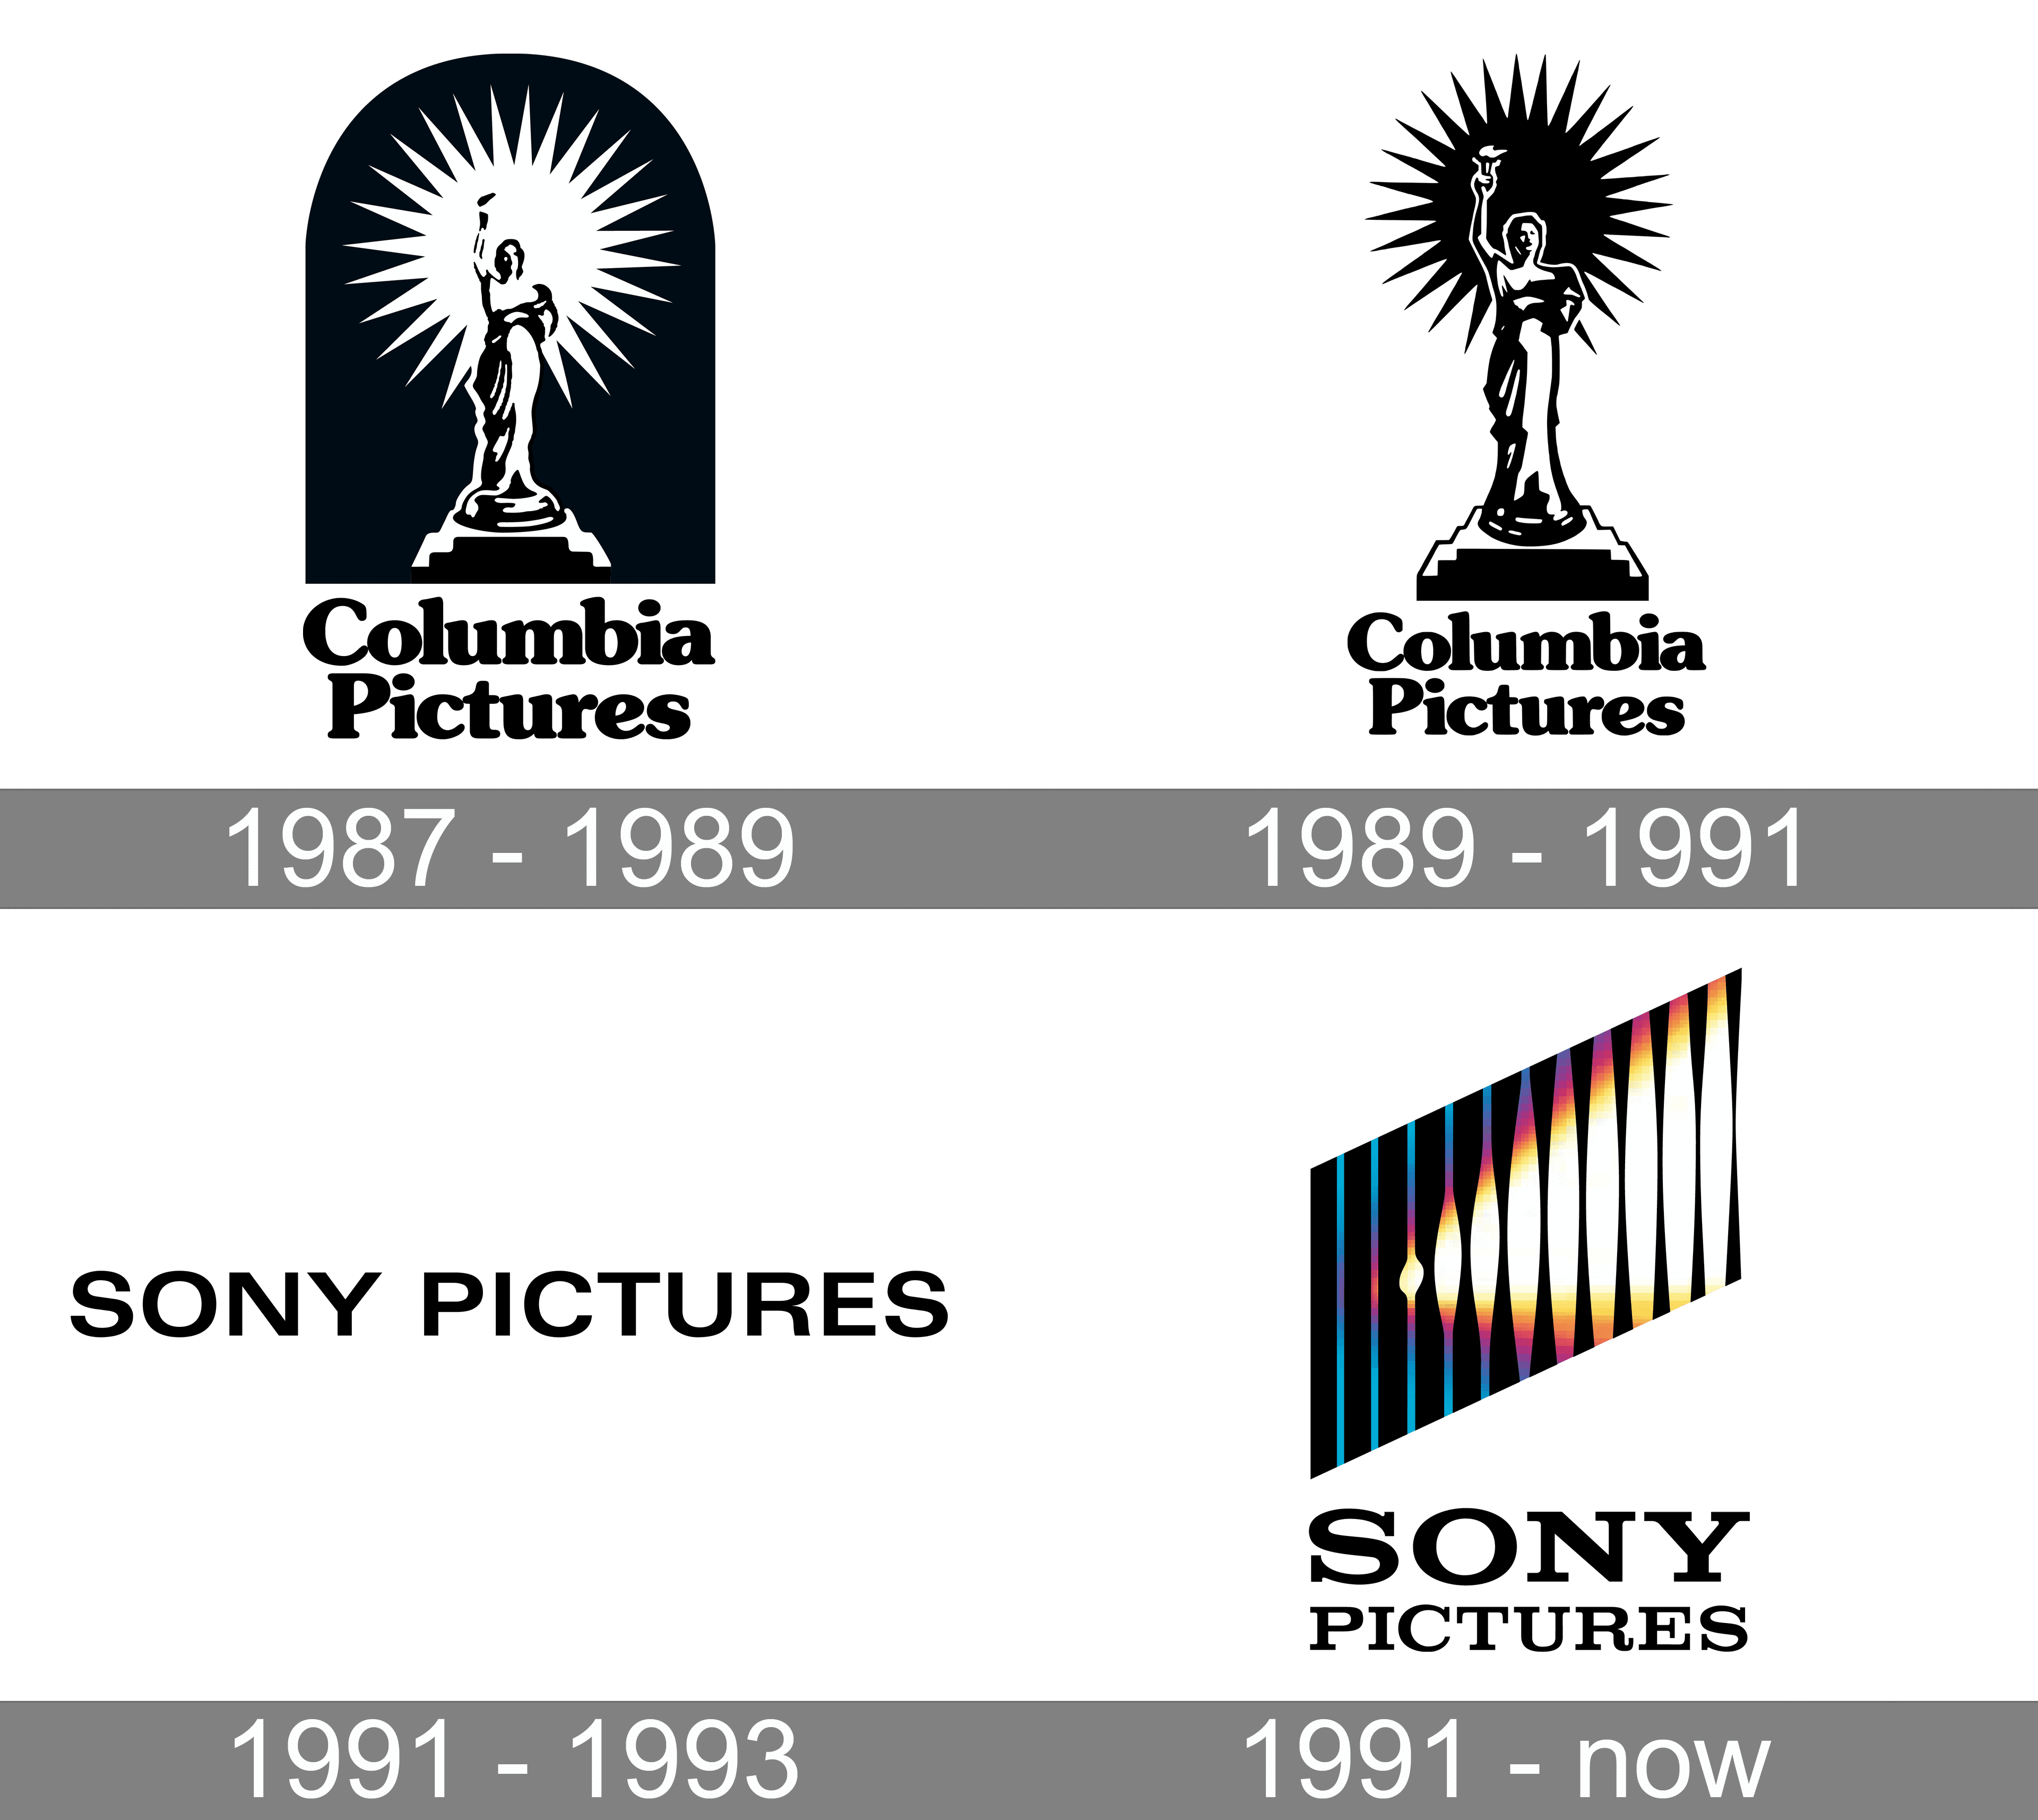 Sony Logo Transparent Png